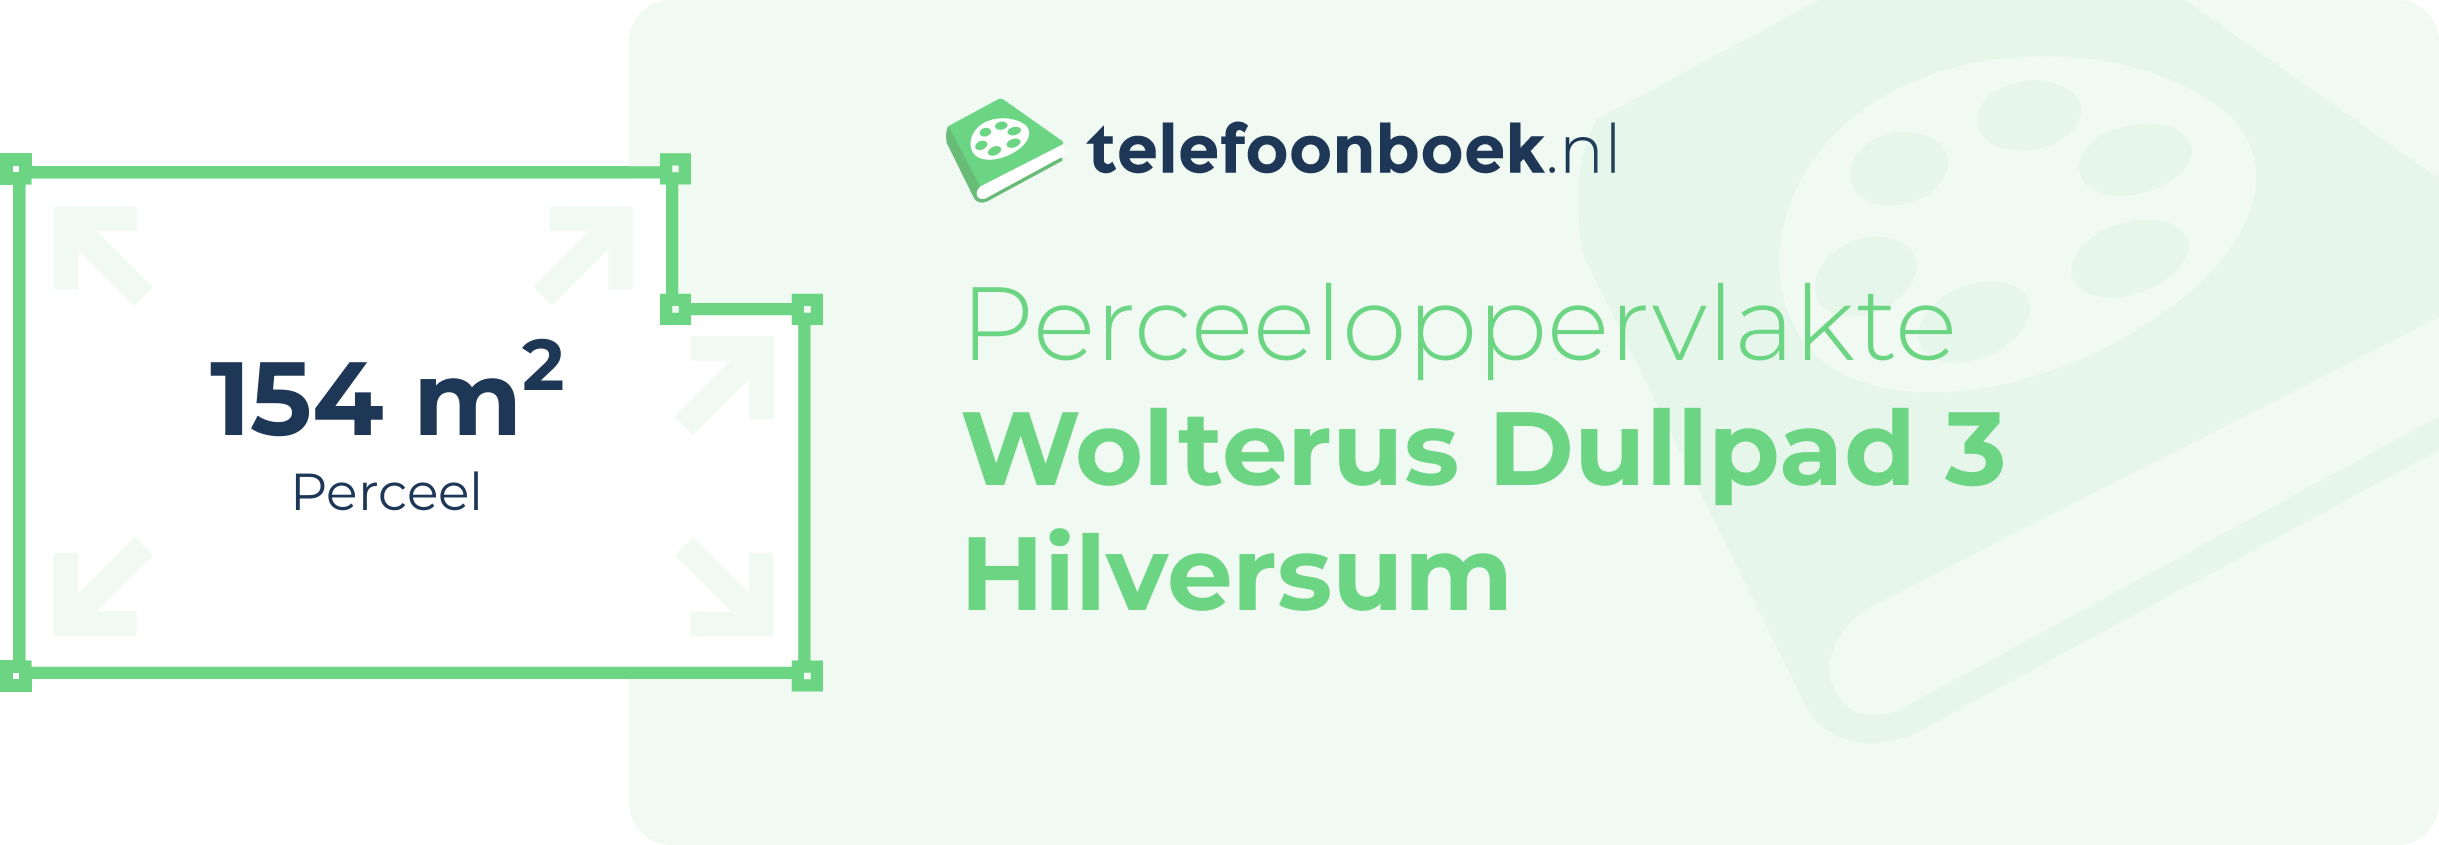 Perceeloppervlakte Wolterus Dullpad 3 Hilversum